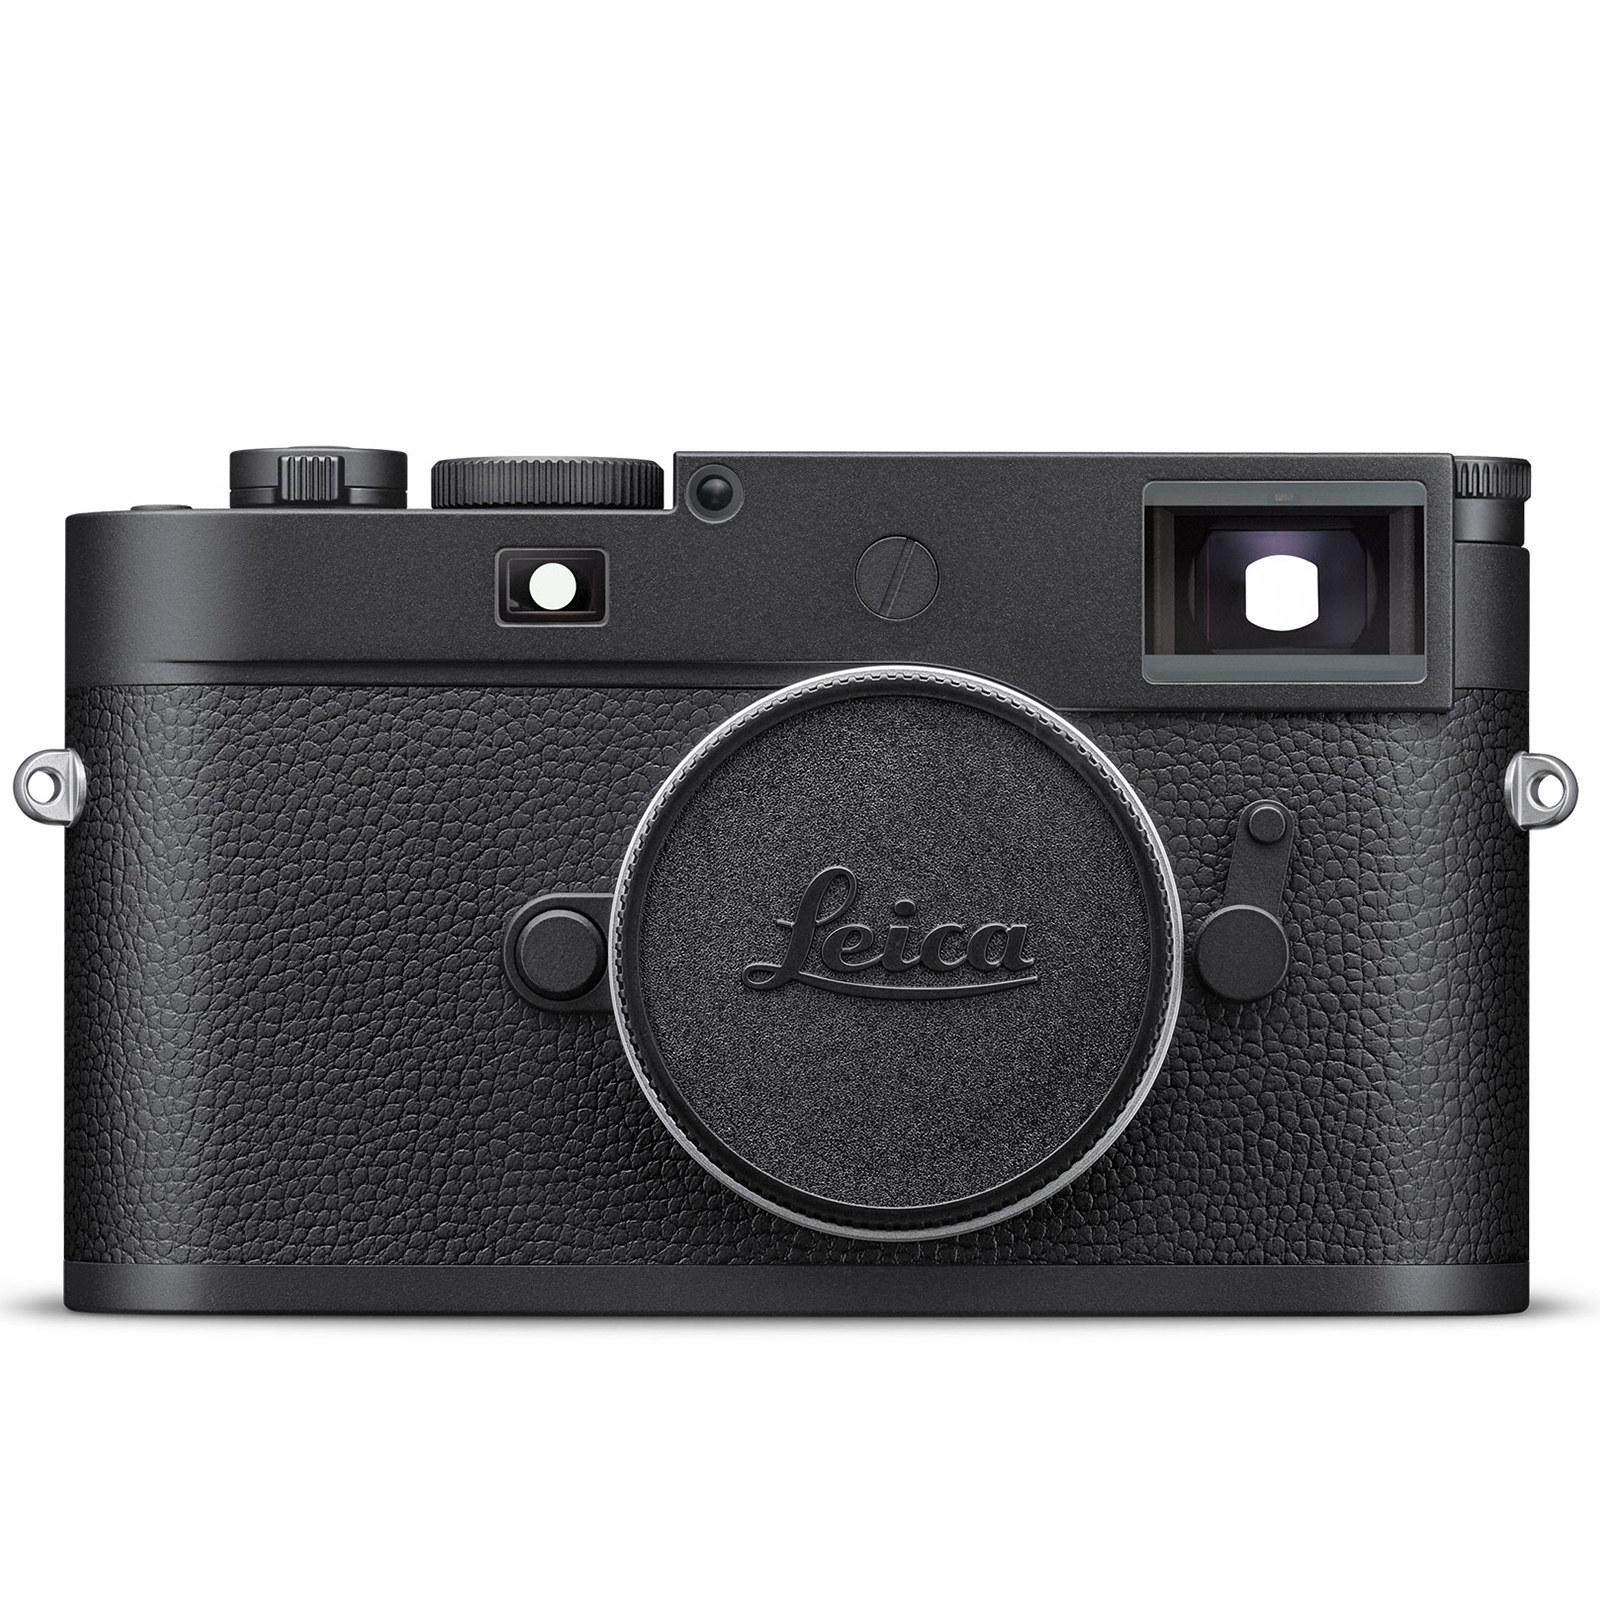 Image of Leica M11 Monochrom Digital Camera Body